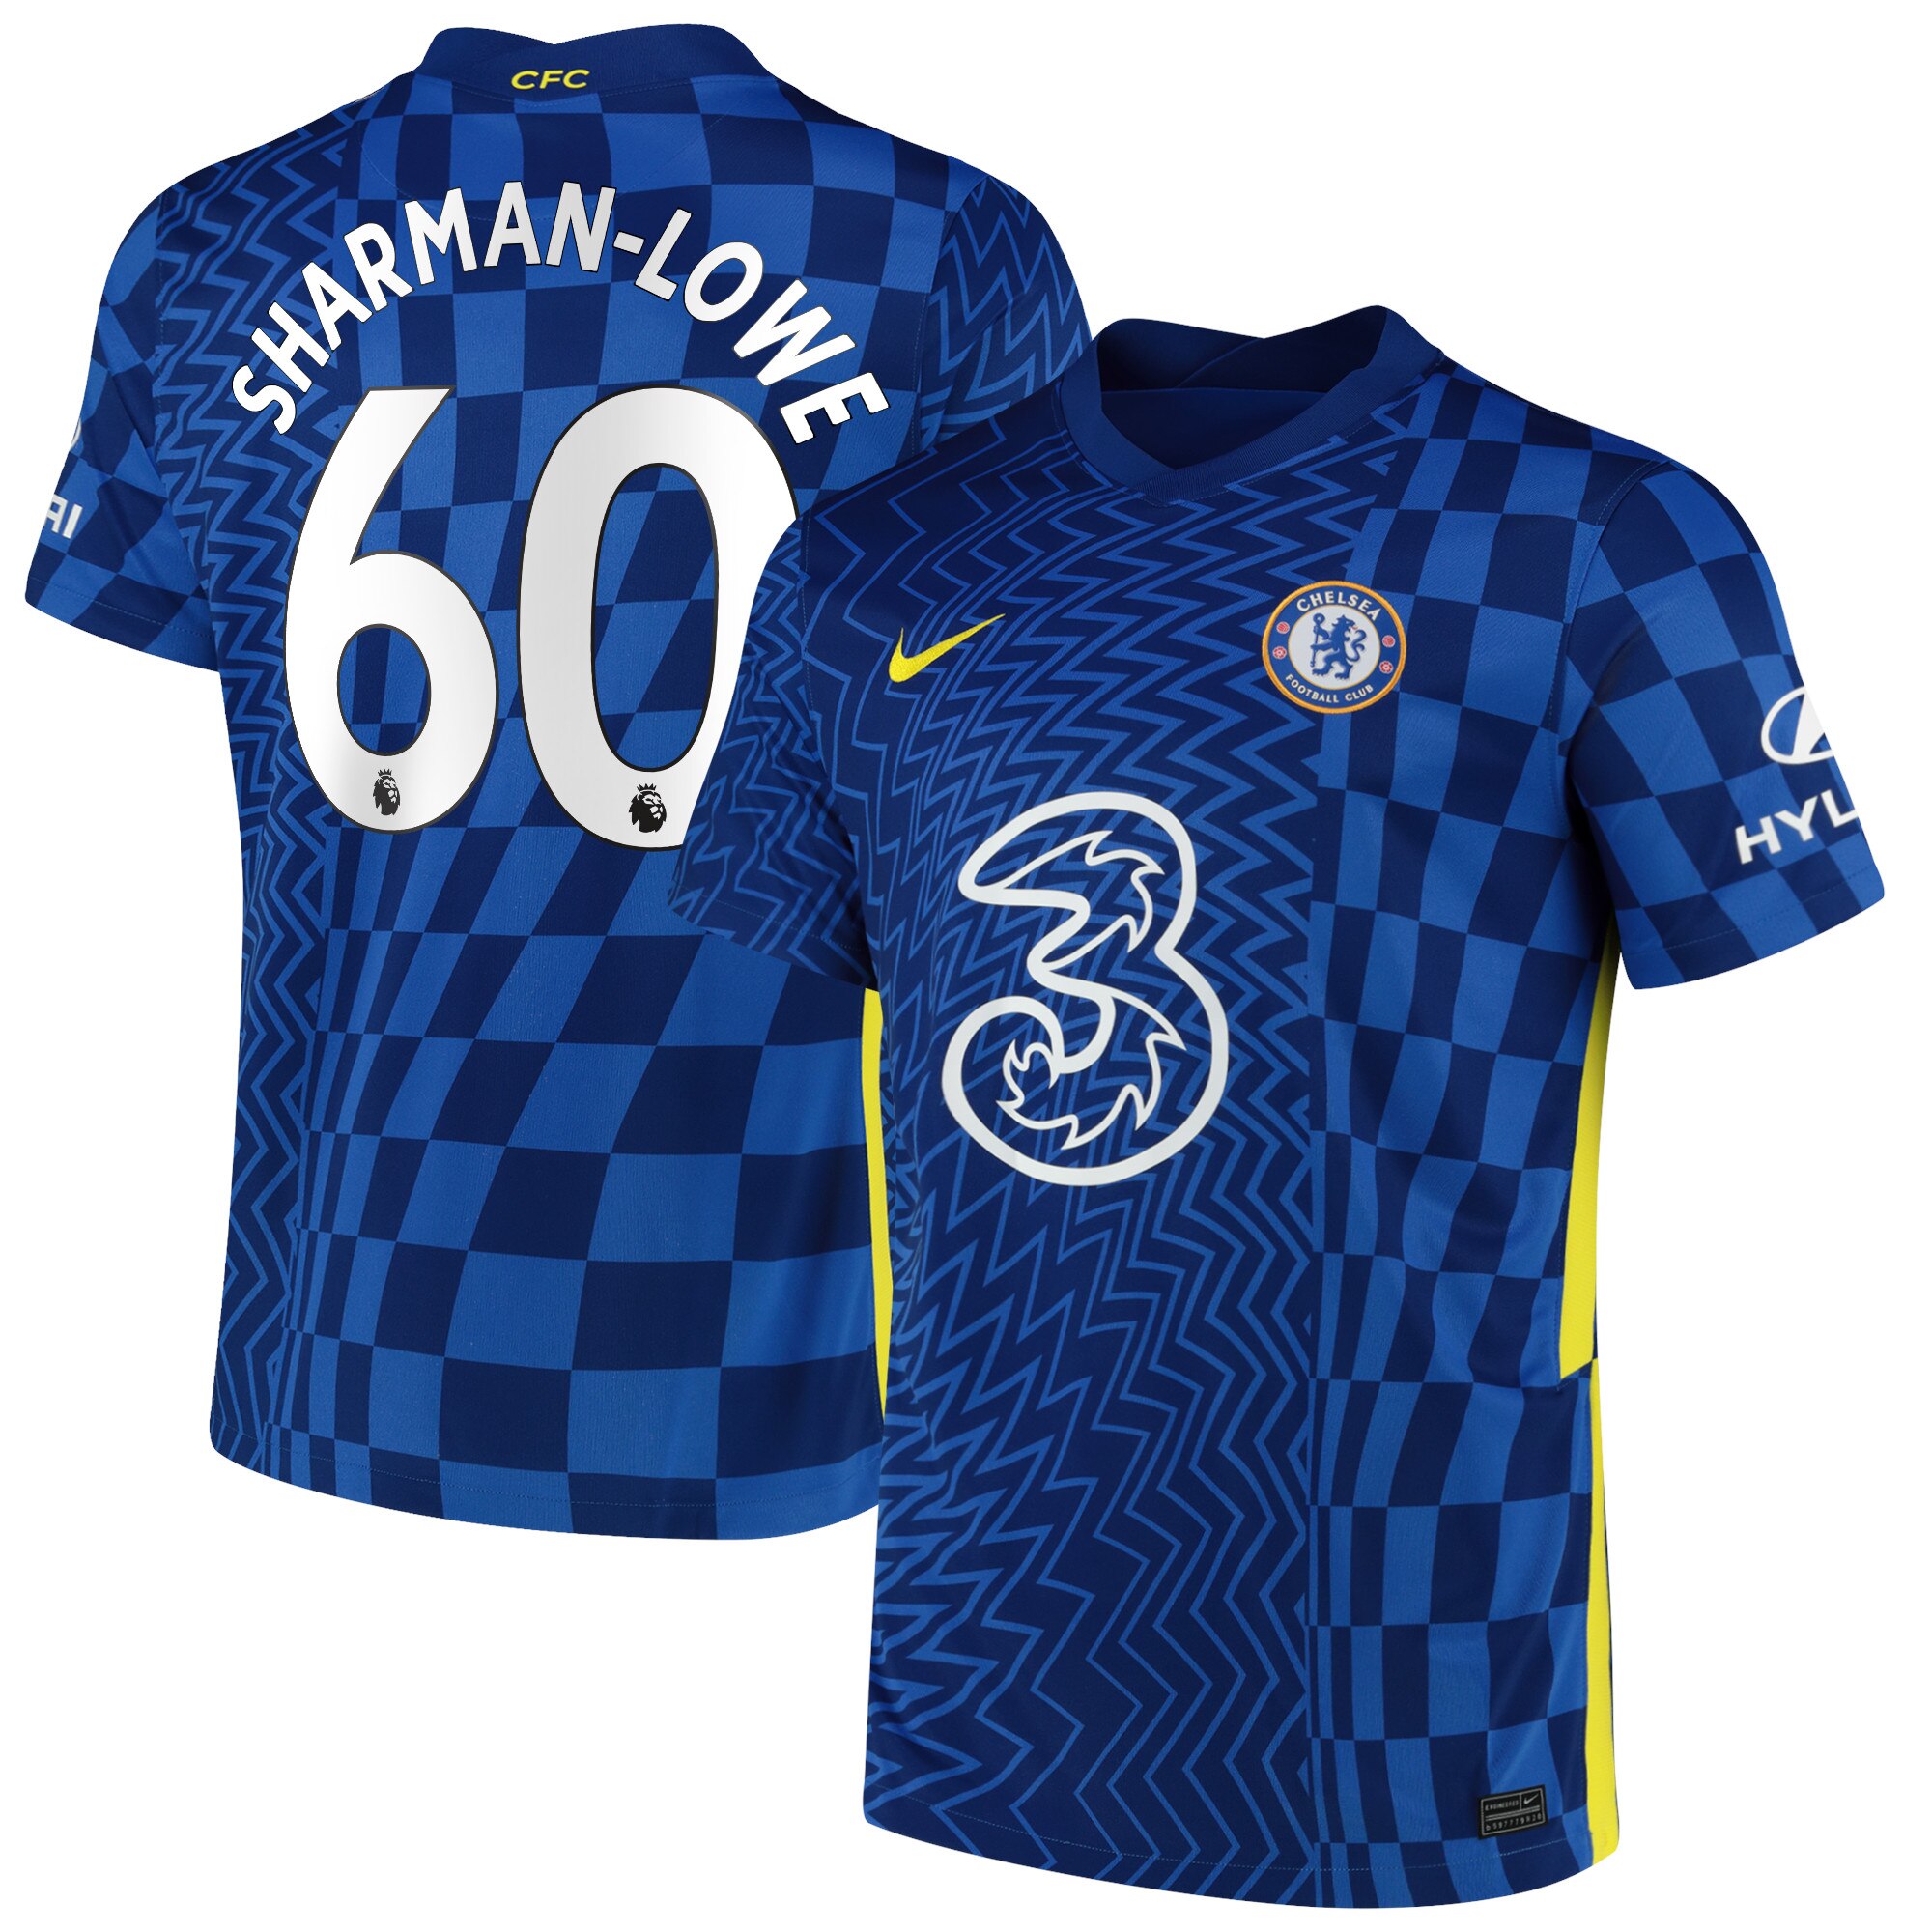 Chelsea Home Stadium Shirt 2021-22 with Sharman-lowe 60 printing